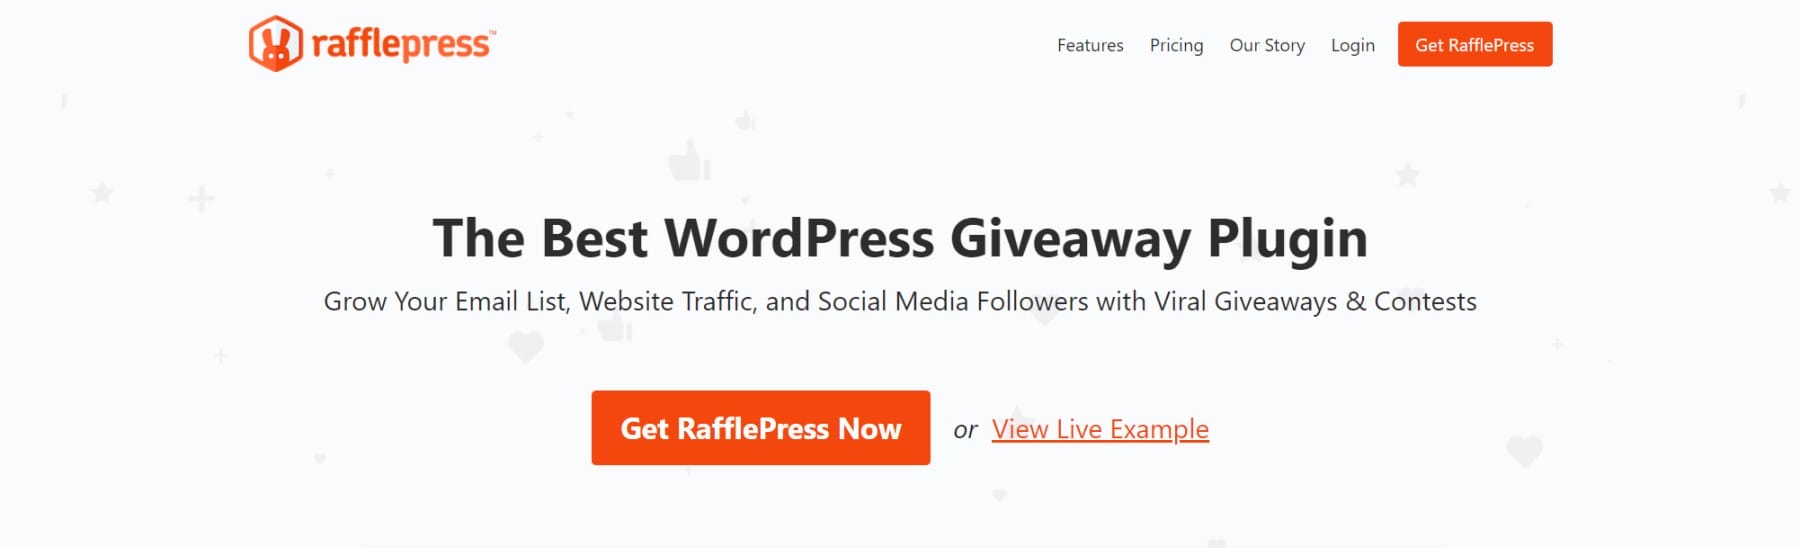 RafflePress WordPress Giveaway マーケティング プラグイン